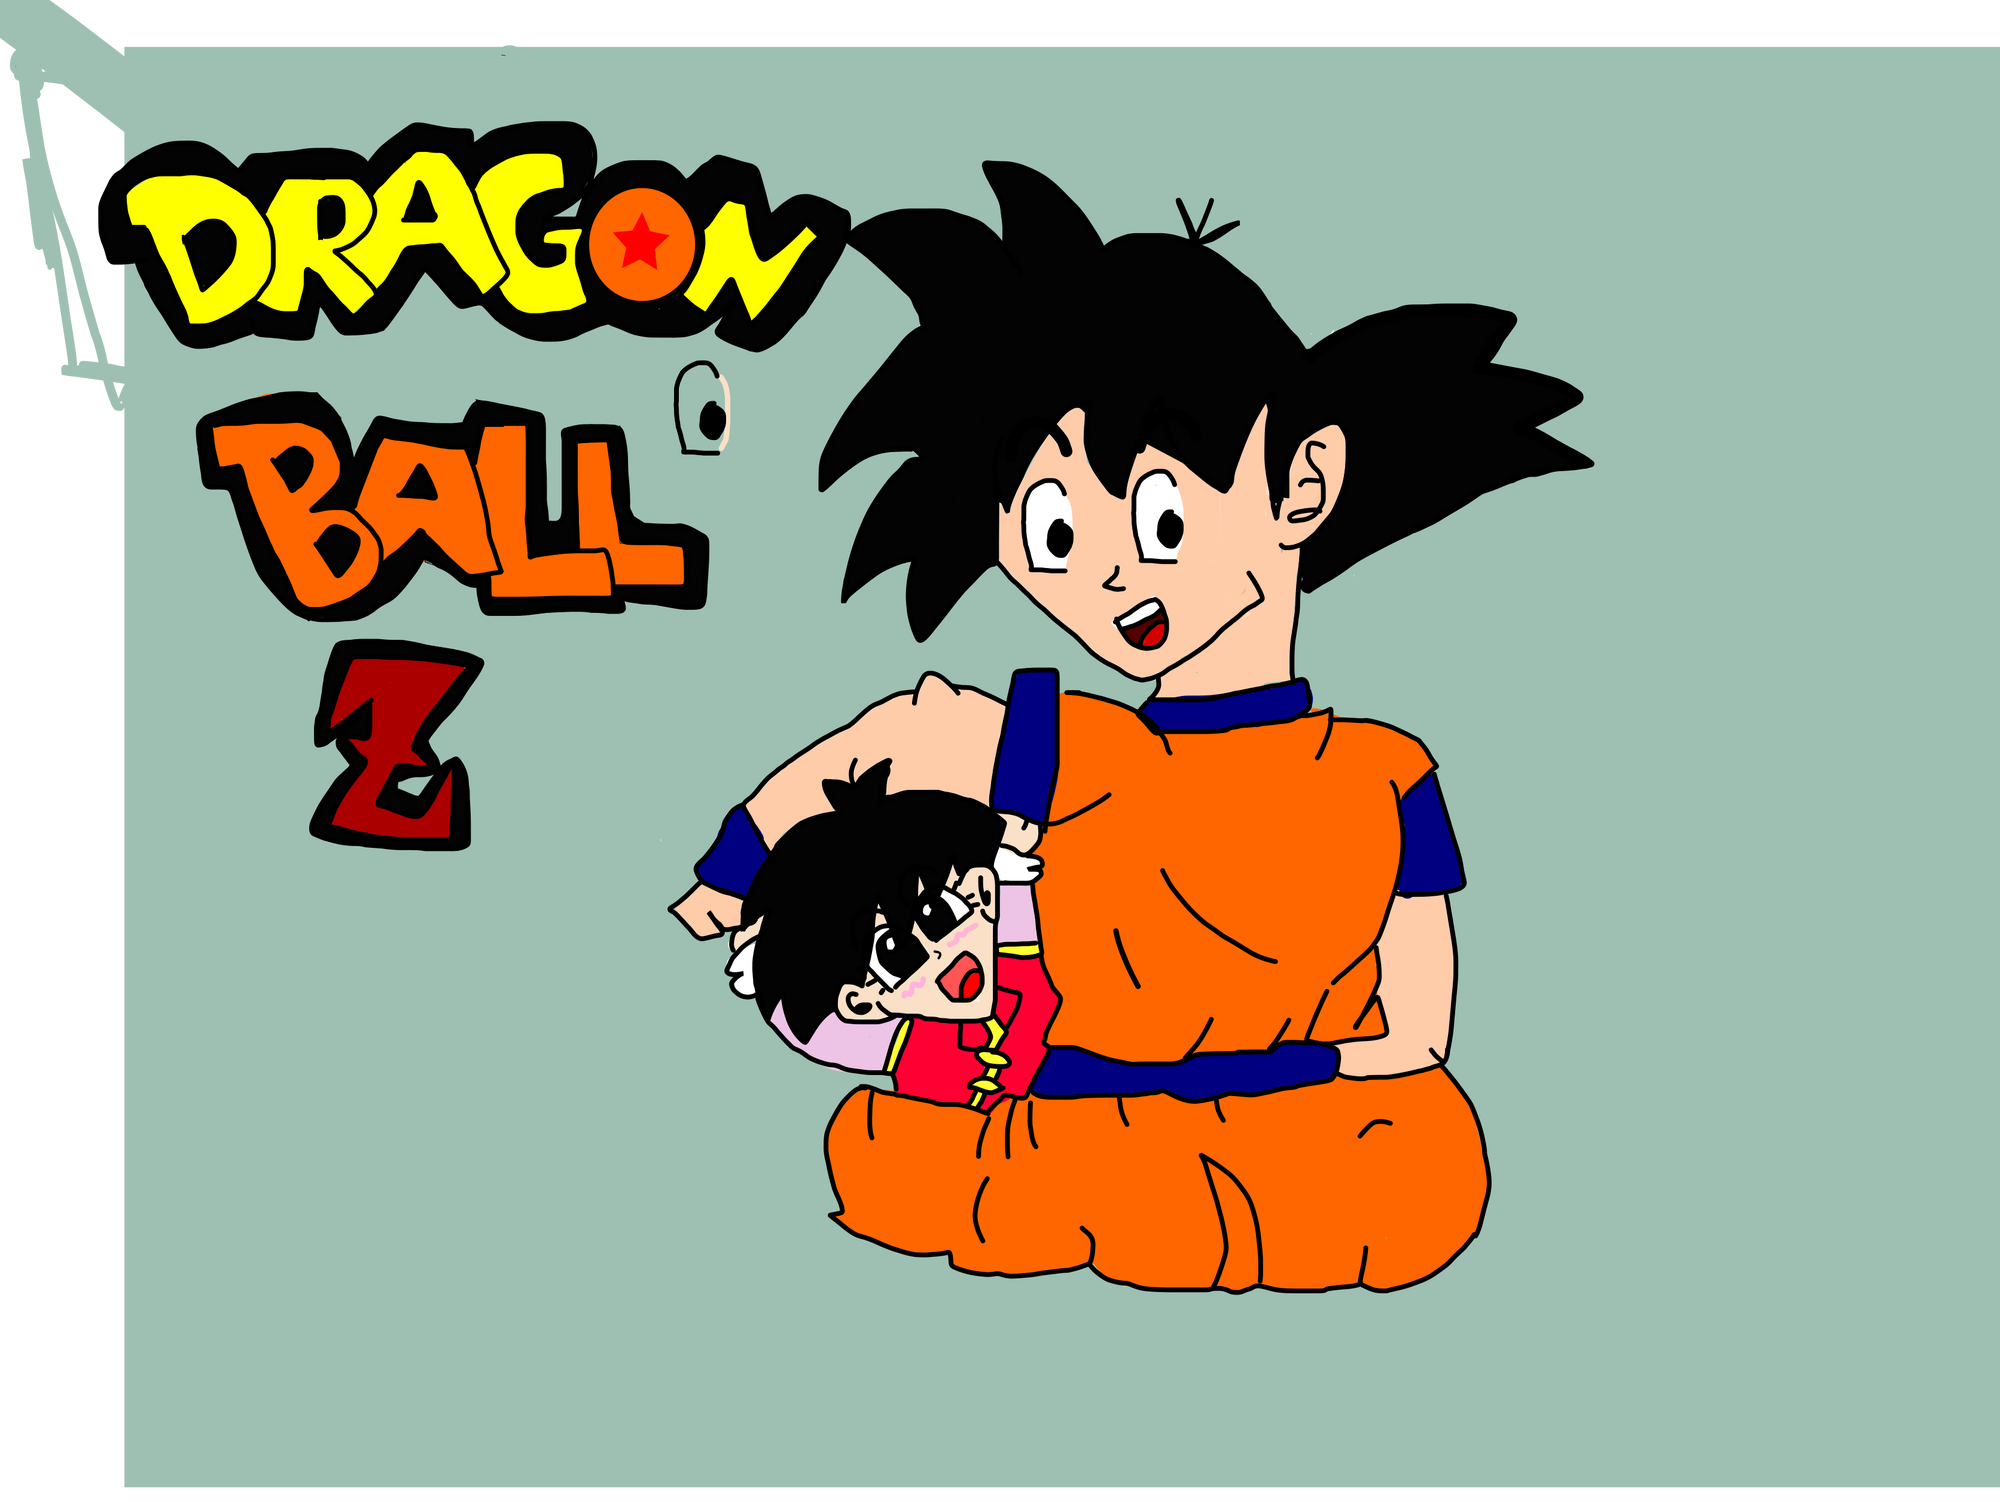 Download File:Goku and sora.svg | Dragon Ball Wiki | FANDOM powered by Wikia